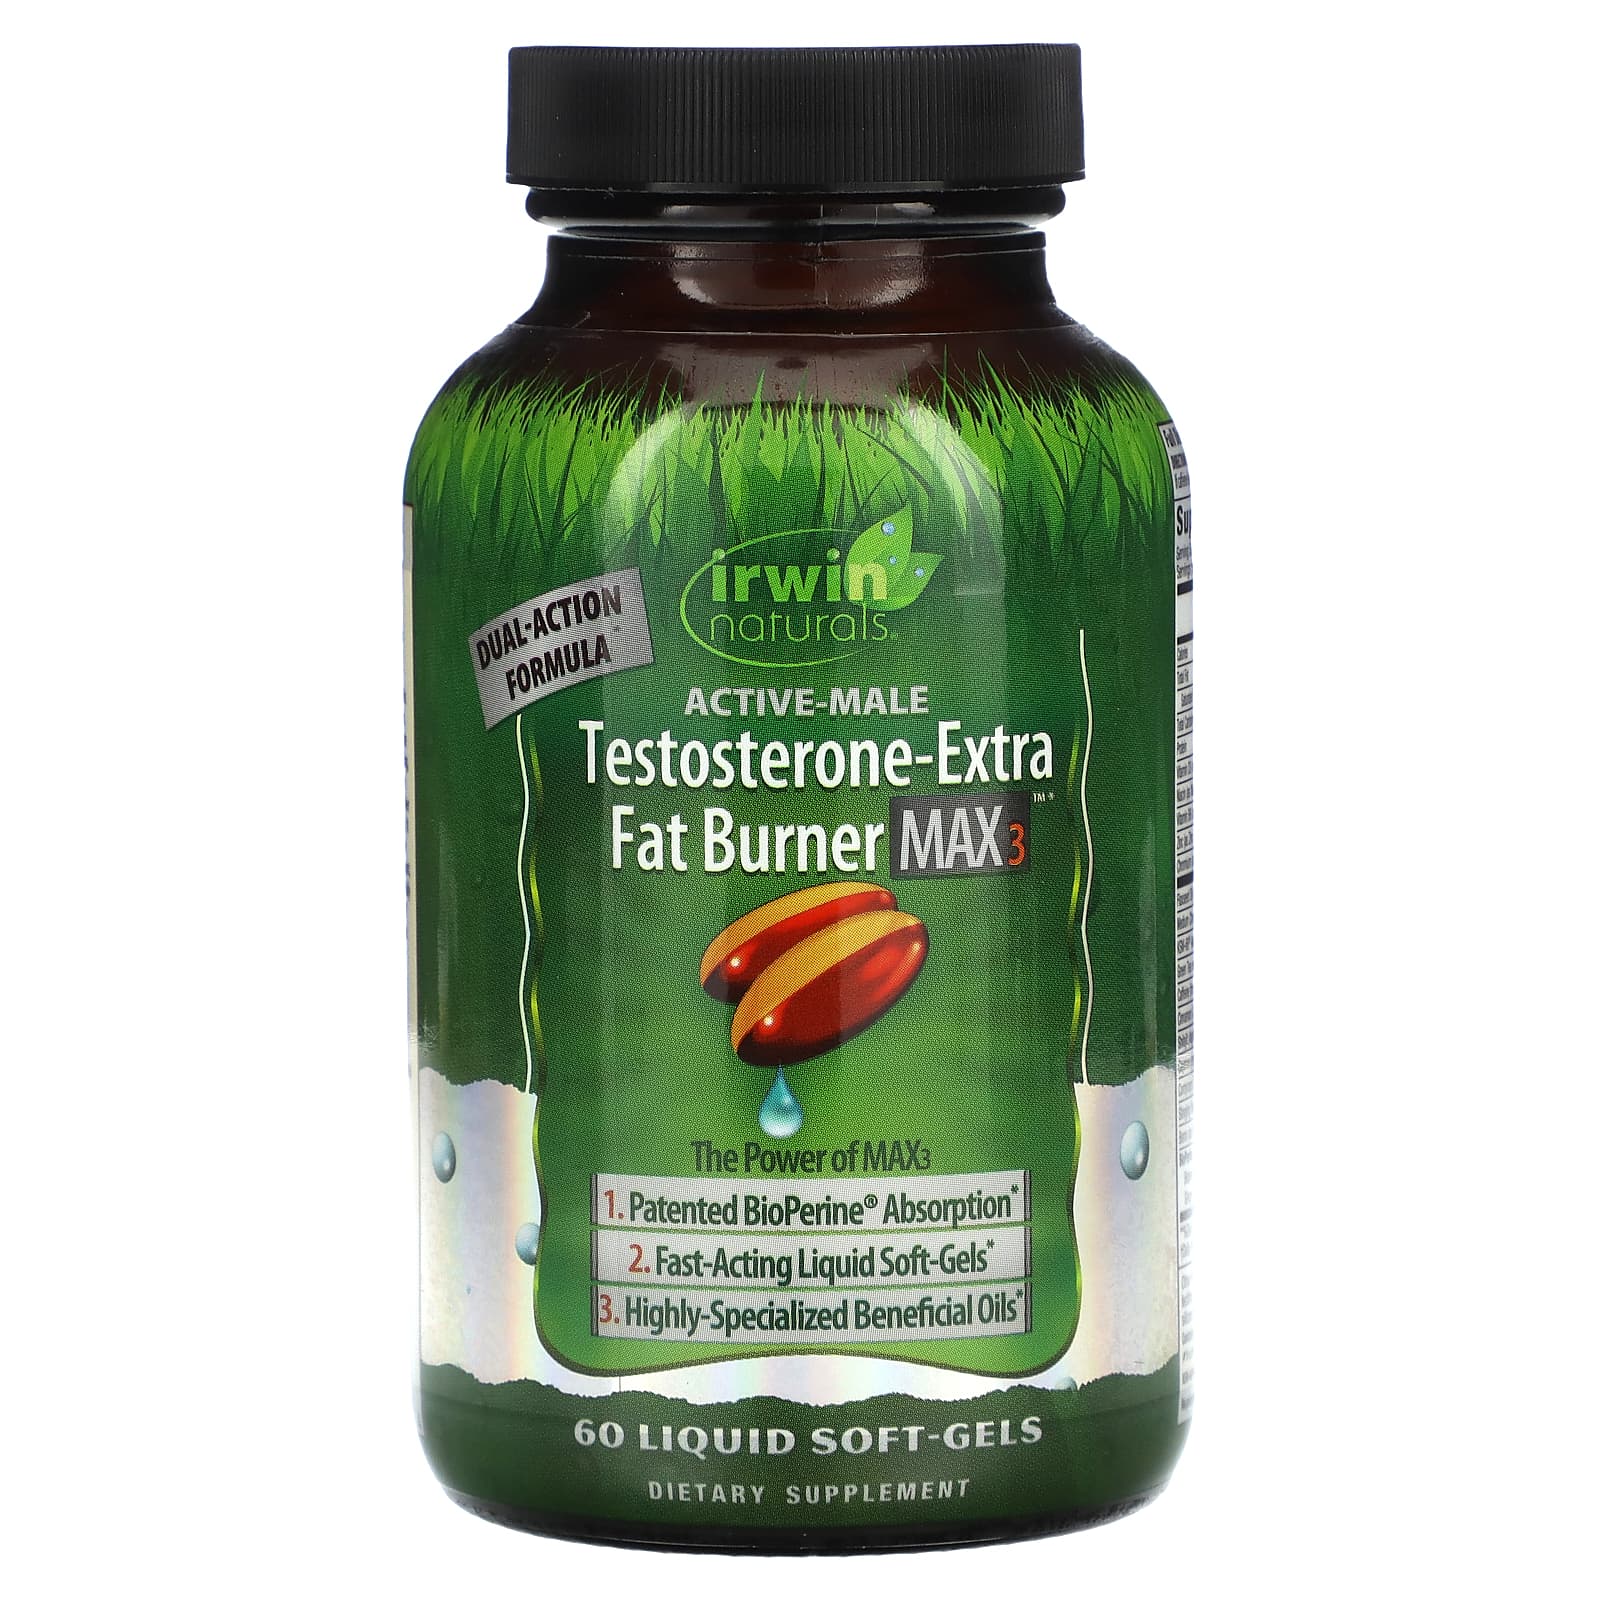 Irwin Naturals Active-Male Testosterone-Extra Fat Burner MAX 3 60 мягких таблеток irwin naturals active male testosterone extra fat burner max 3 60 мягких таблеток